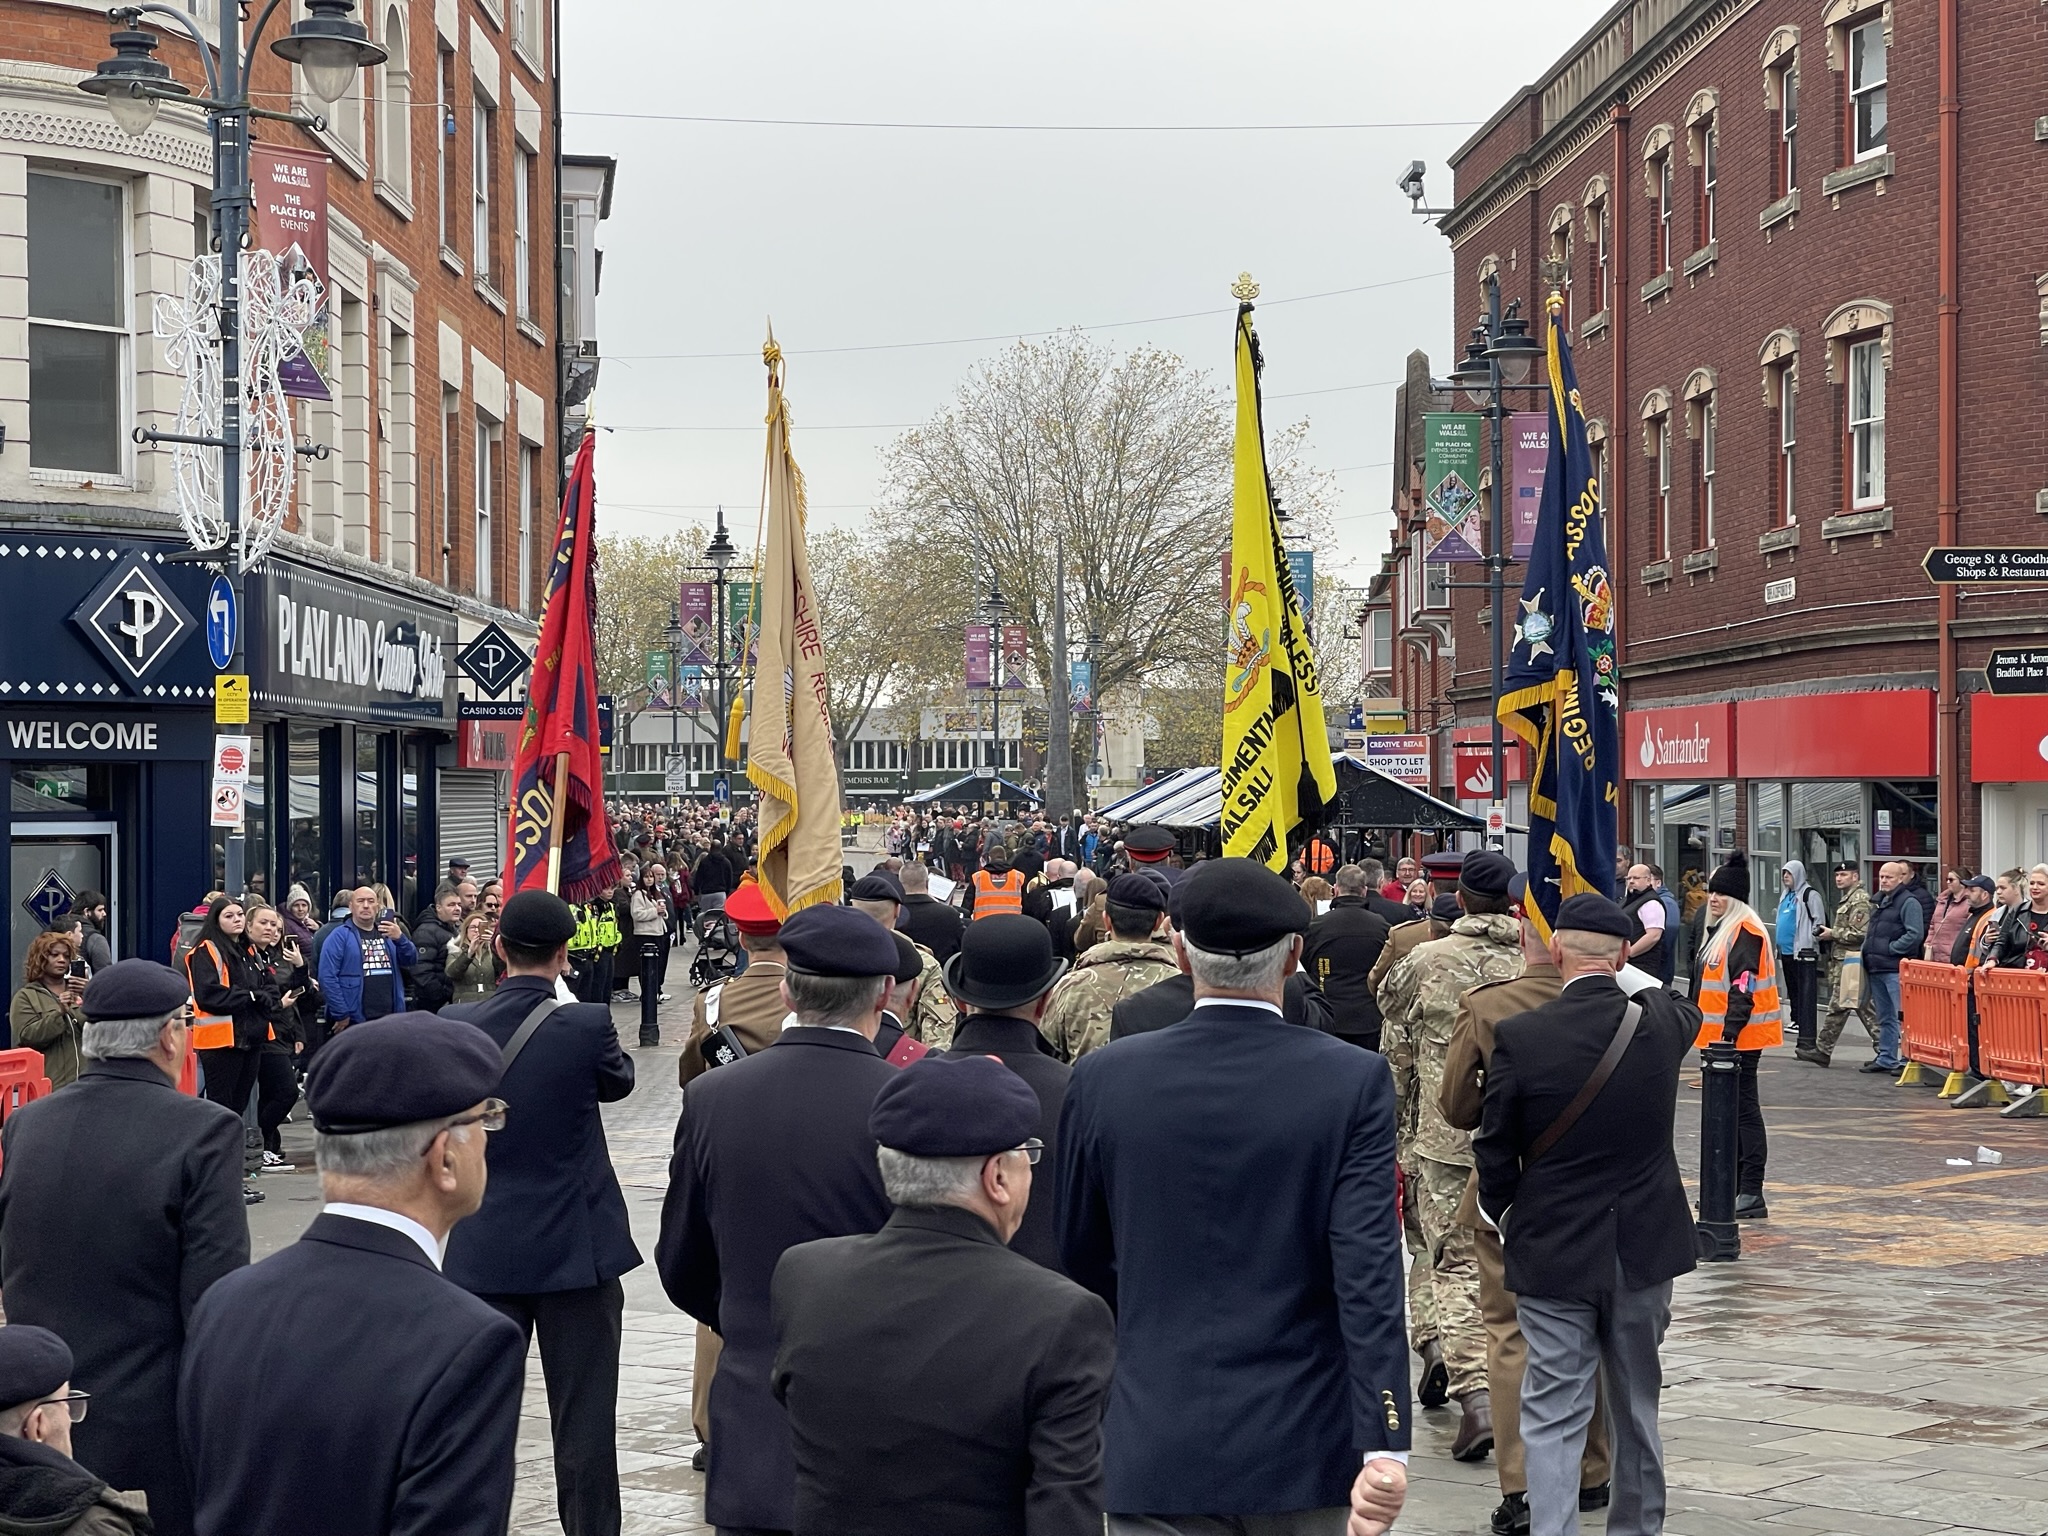 The parade through Walsall town centre